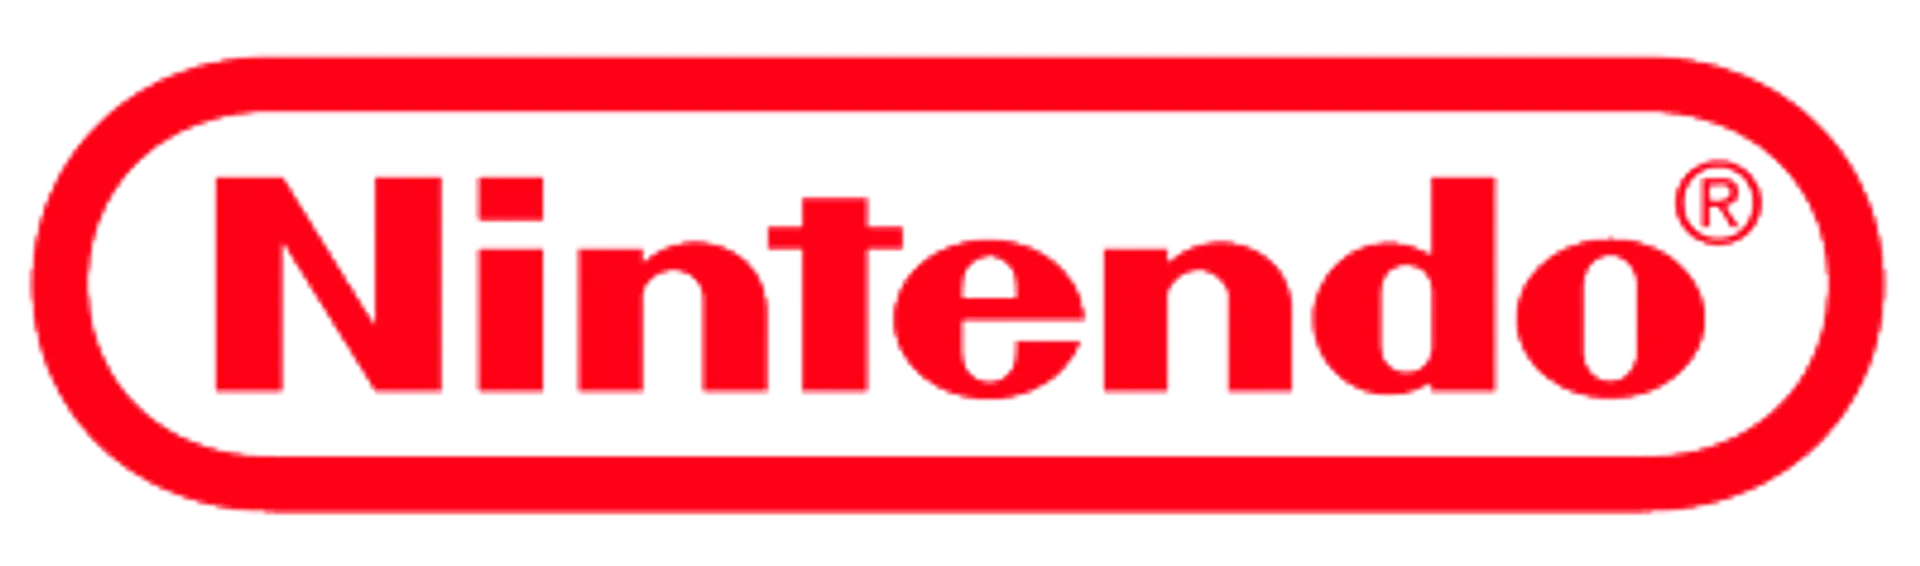 NINTENDO logo